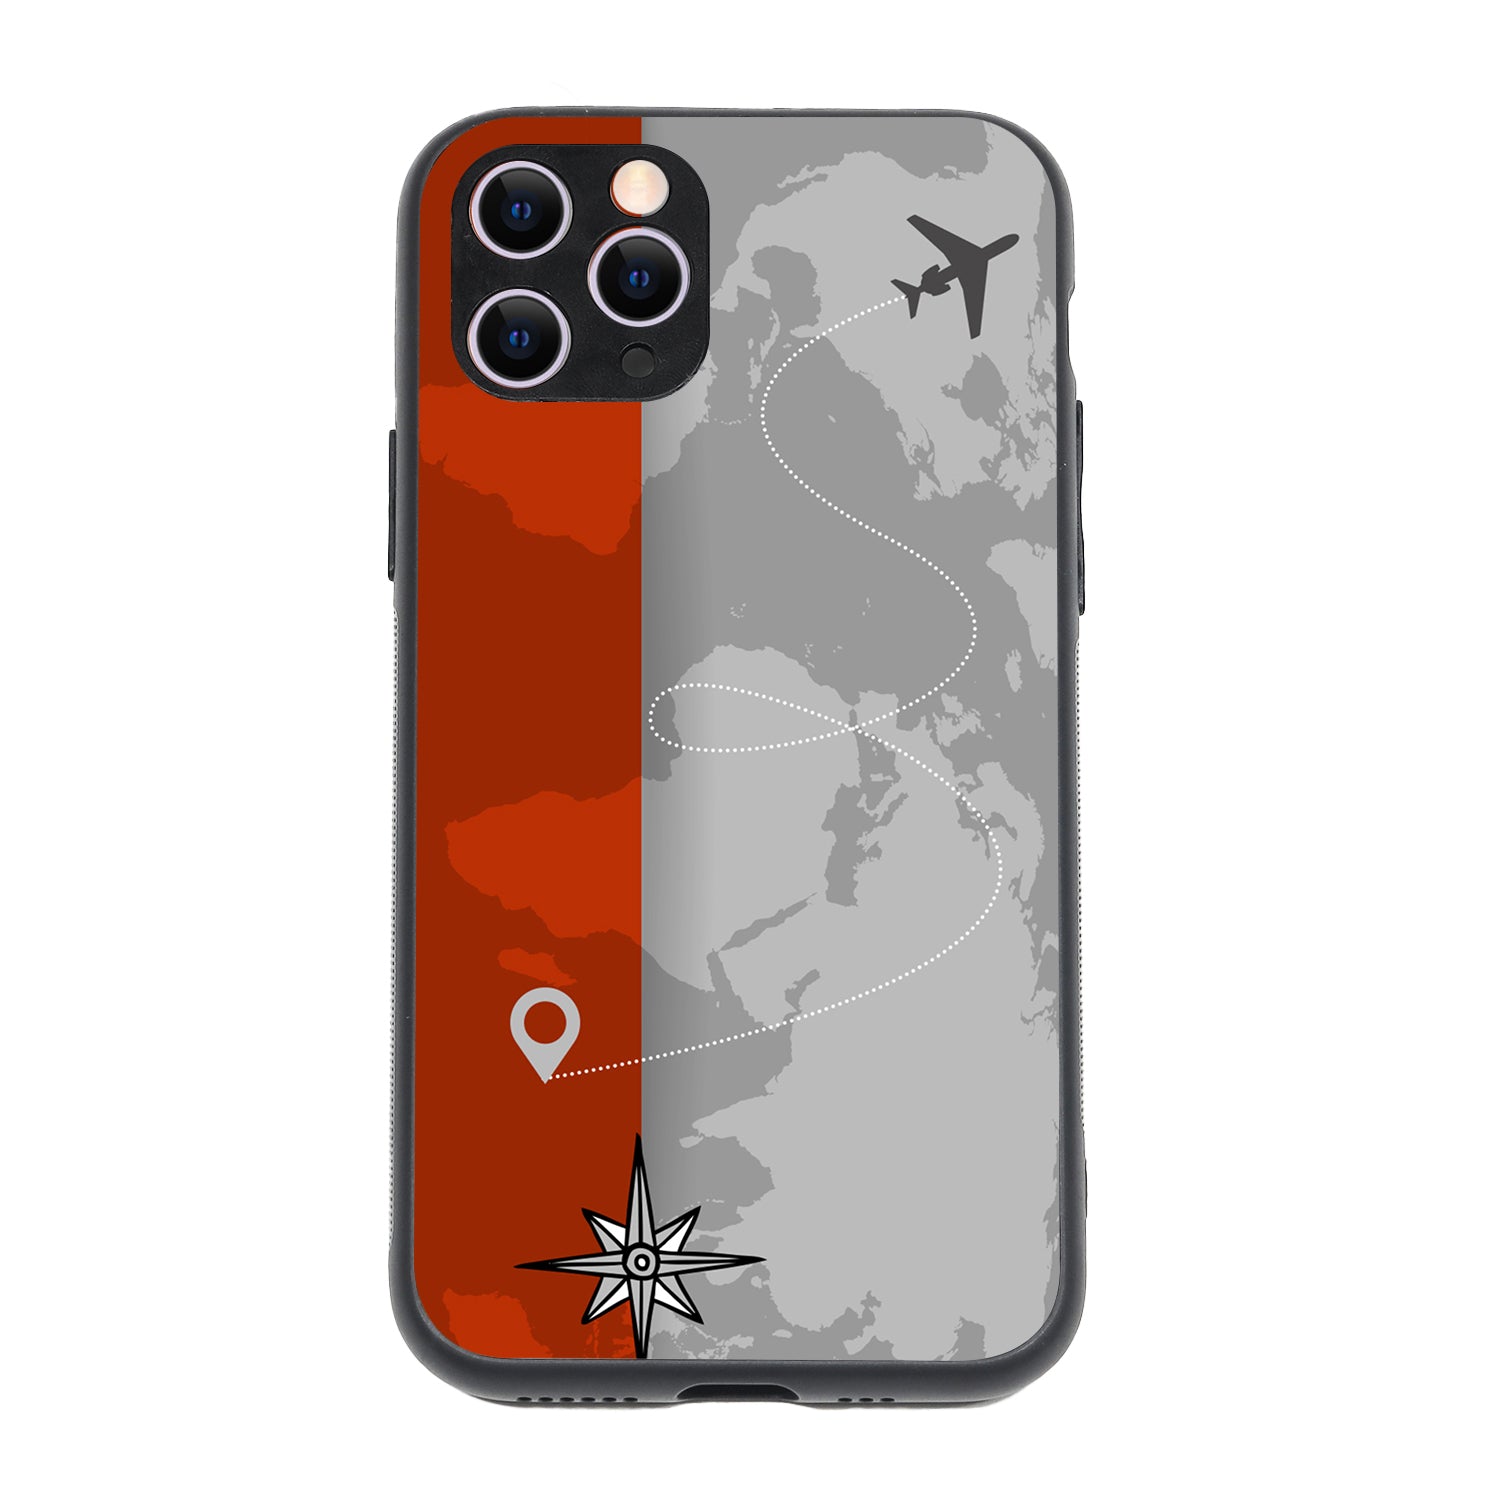 World Tour Travel iPhone 11 Pro Case